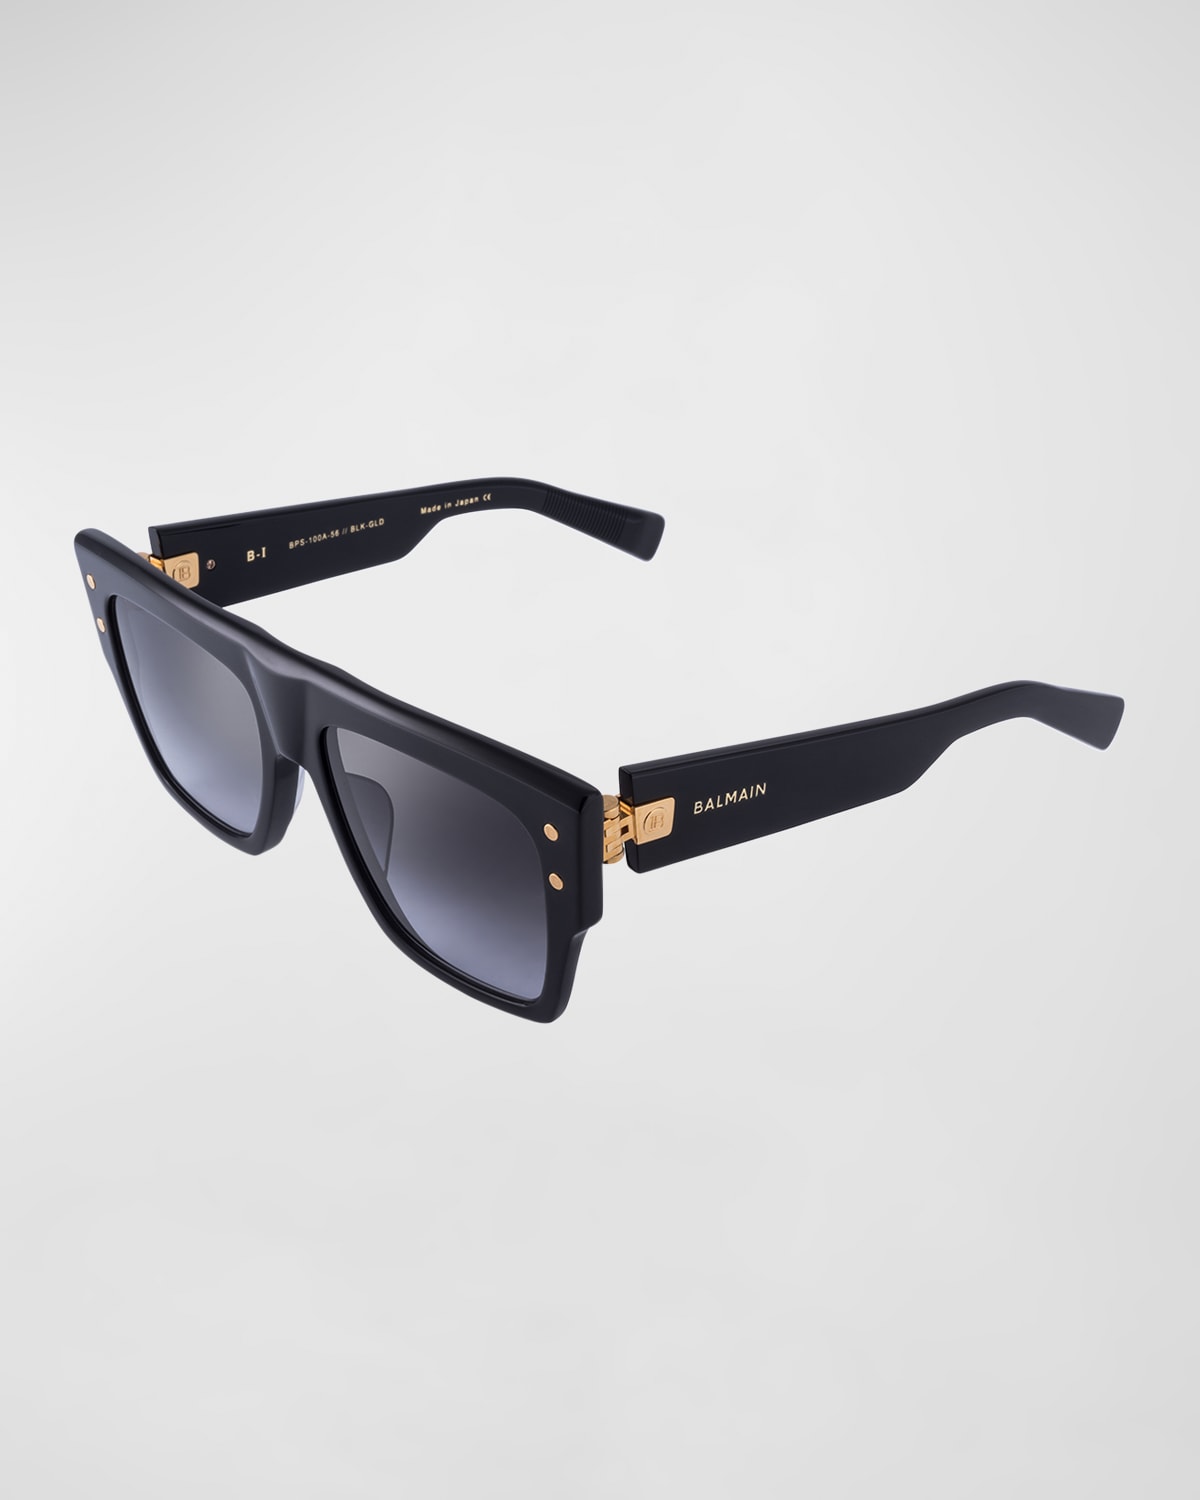 Balmain B-i Acetate Rectangle Sunglasses In Black